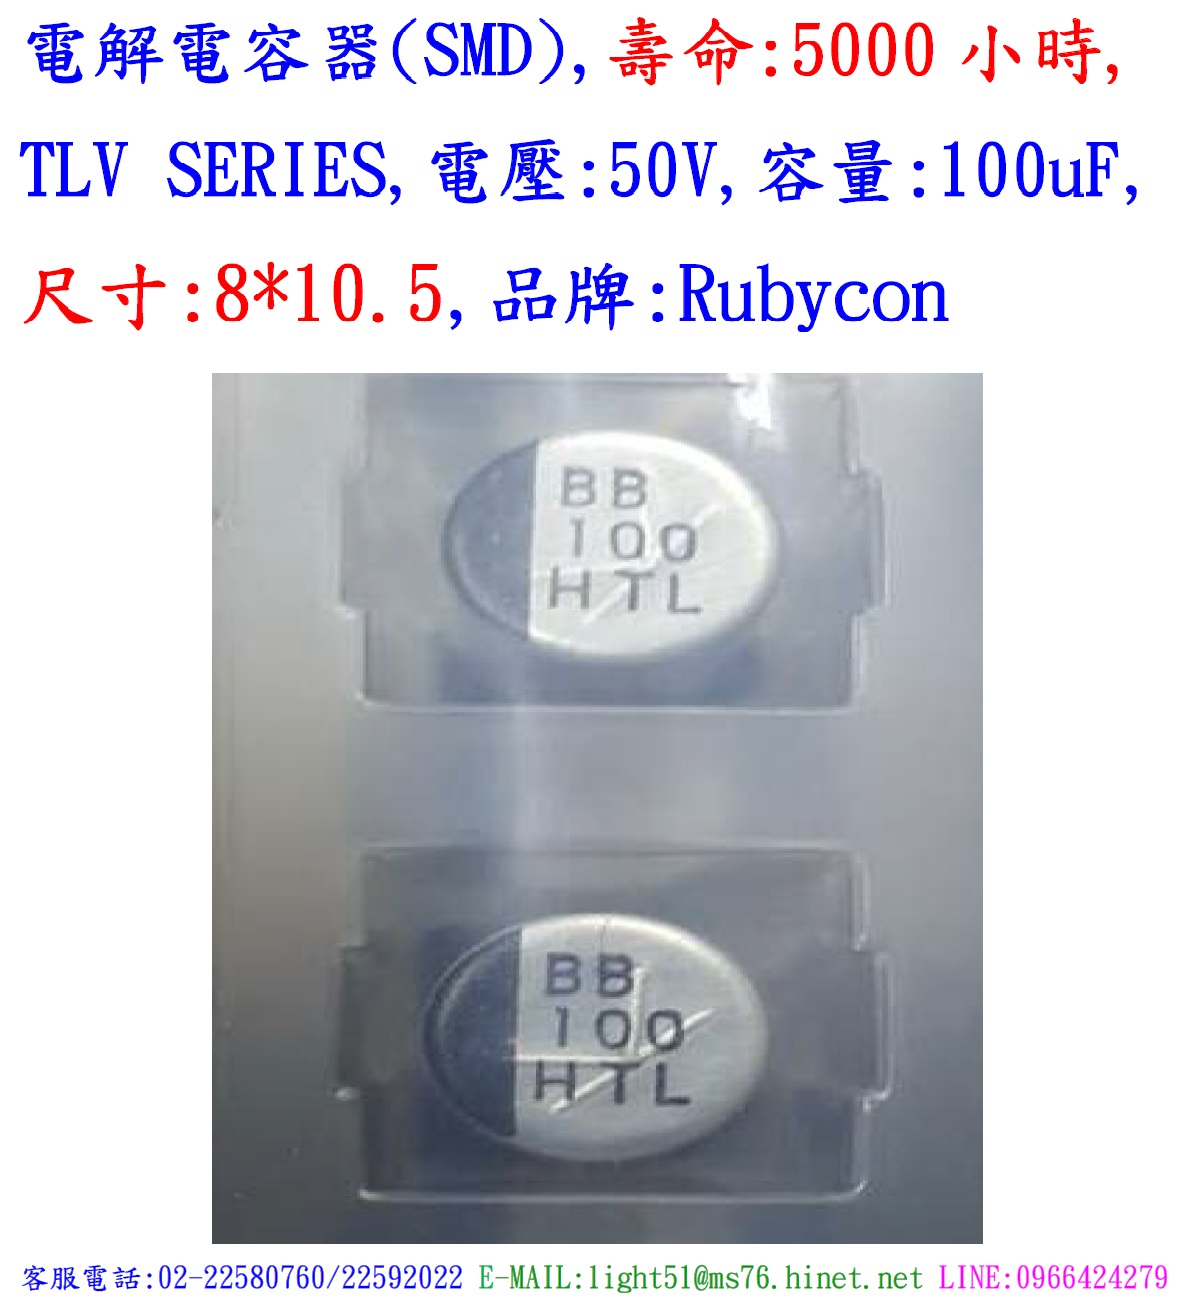 TLV,50V,100uF,尺寸:8*10.5,電解電容器(LOW ESR),壽命:5000小時,SMD Type,Rubycon(日本)